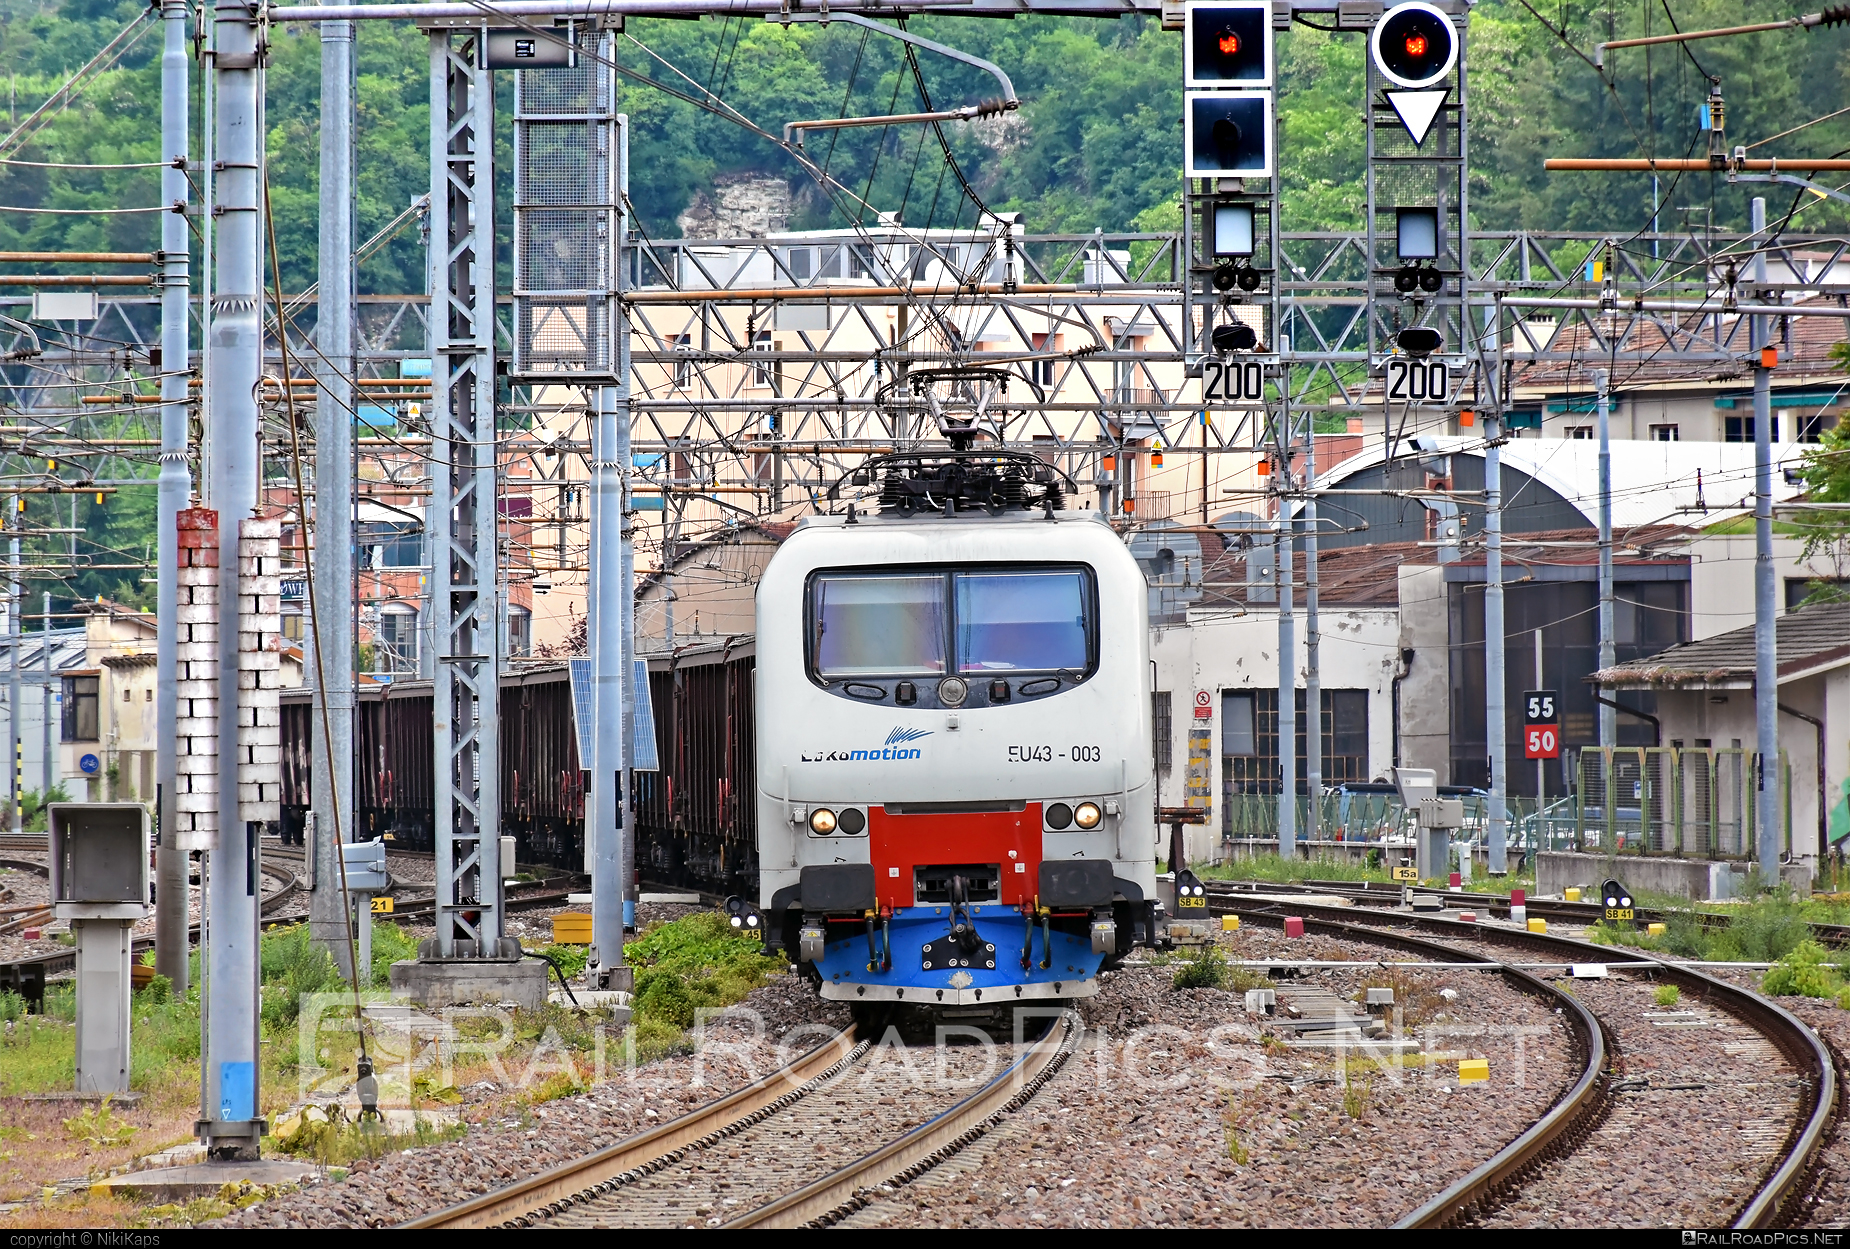 FS Class E.412 - EU43-003 operated by Lokomotion Gesellschaft für Schienentraktion mbH #LokomotionGesellschaftFurSchienentraktion #RailTractionCompany #e412 #fsClassE412 #lokomotion #openwagon #rtc